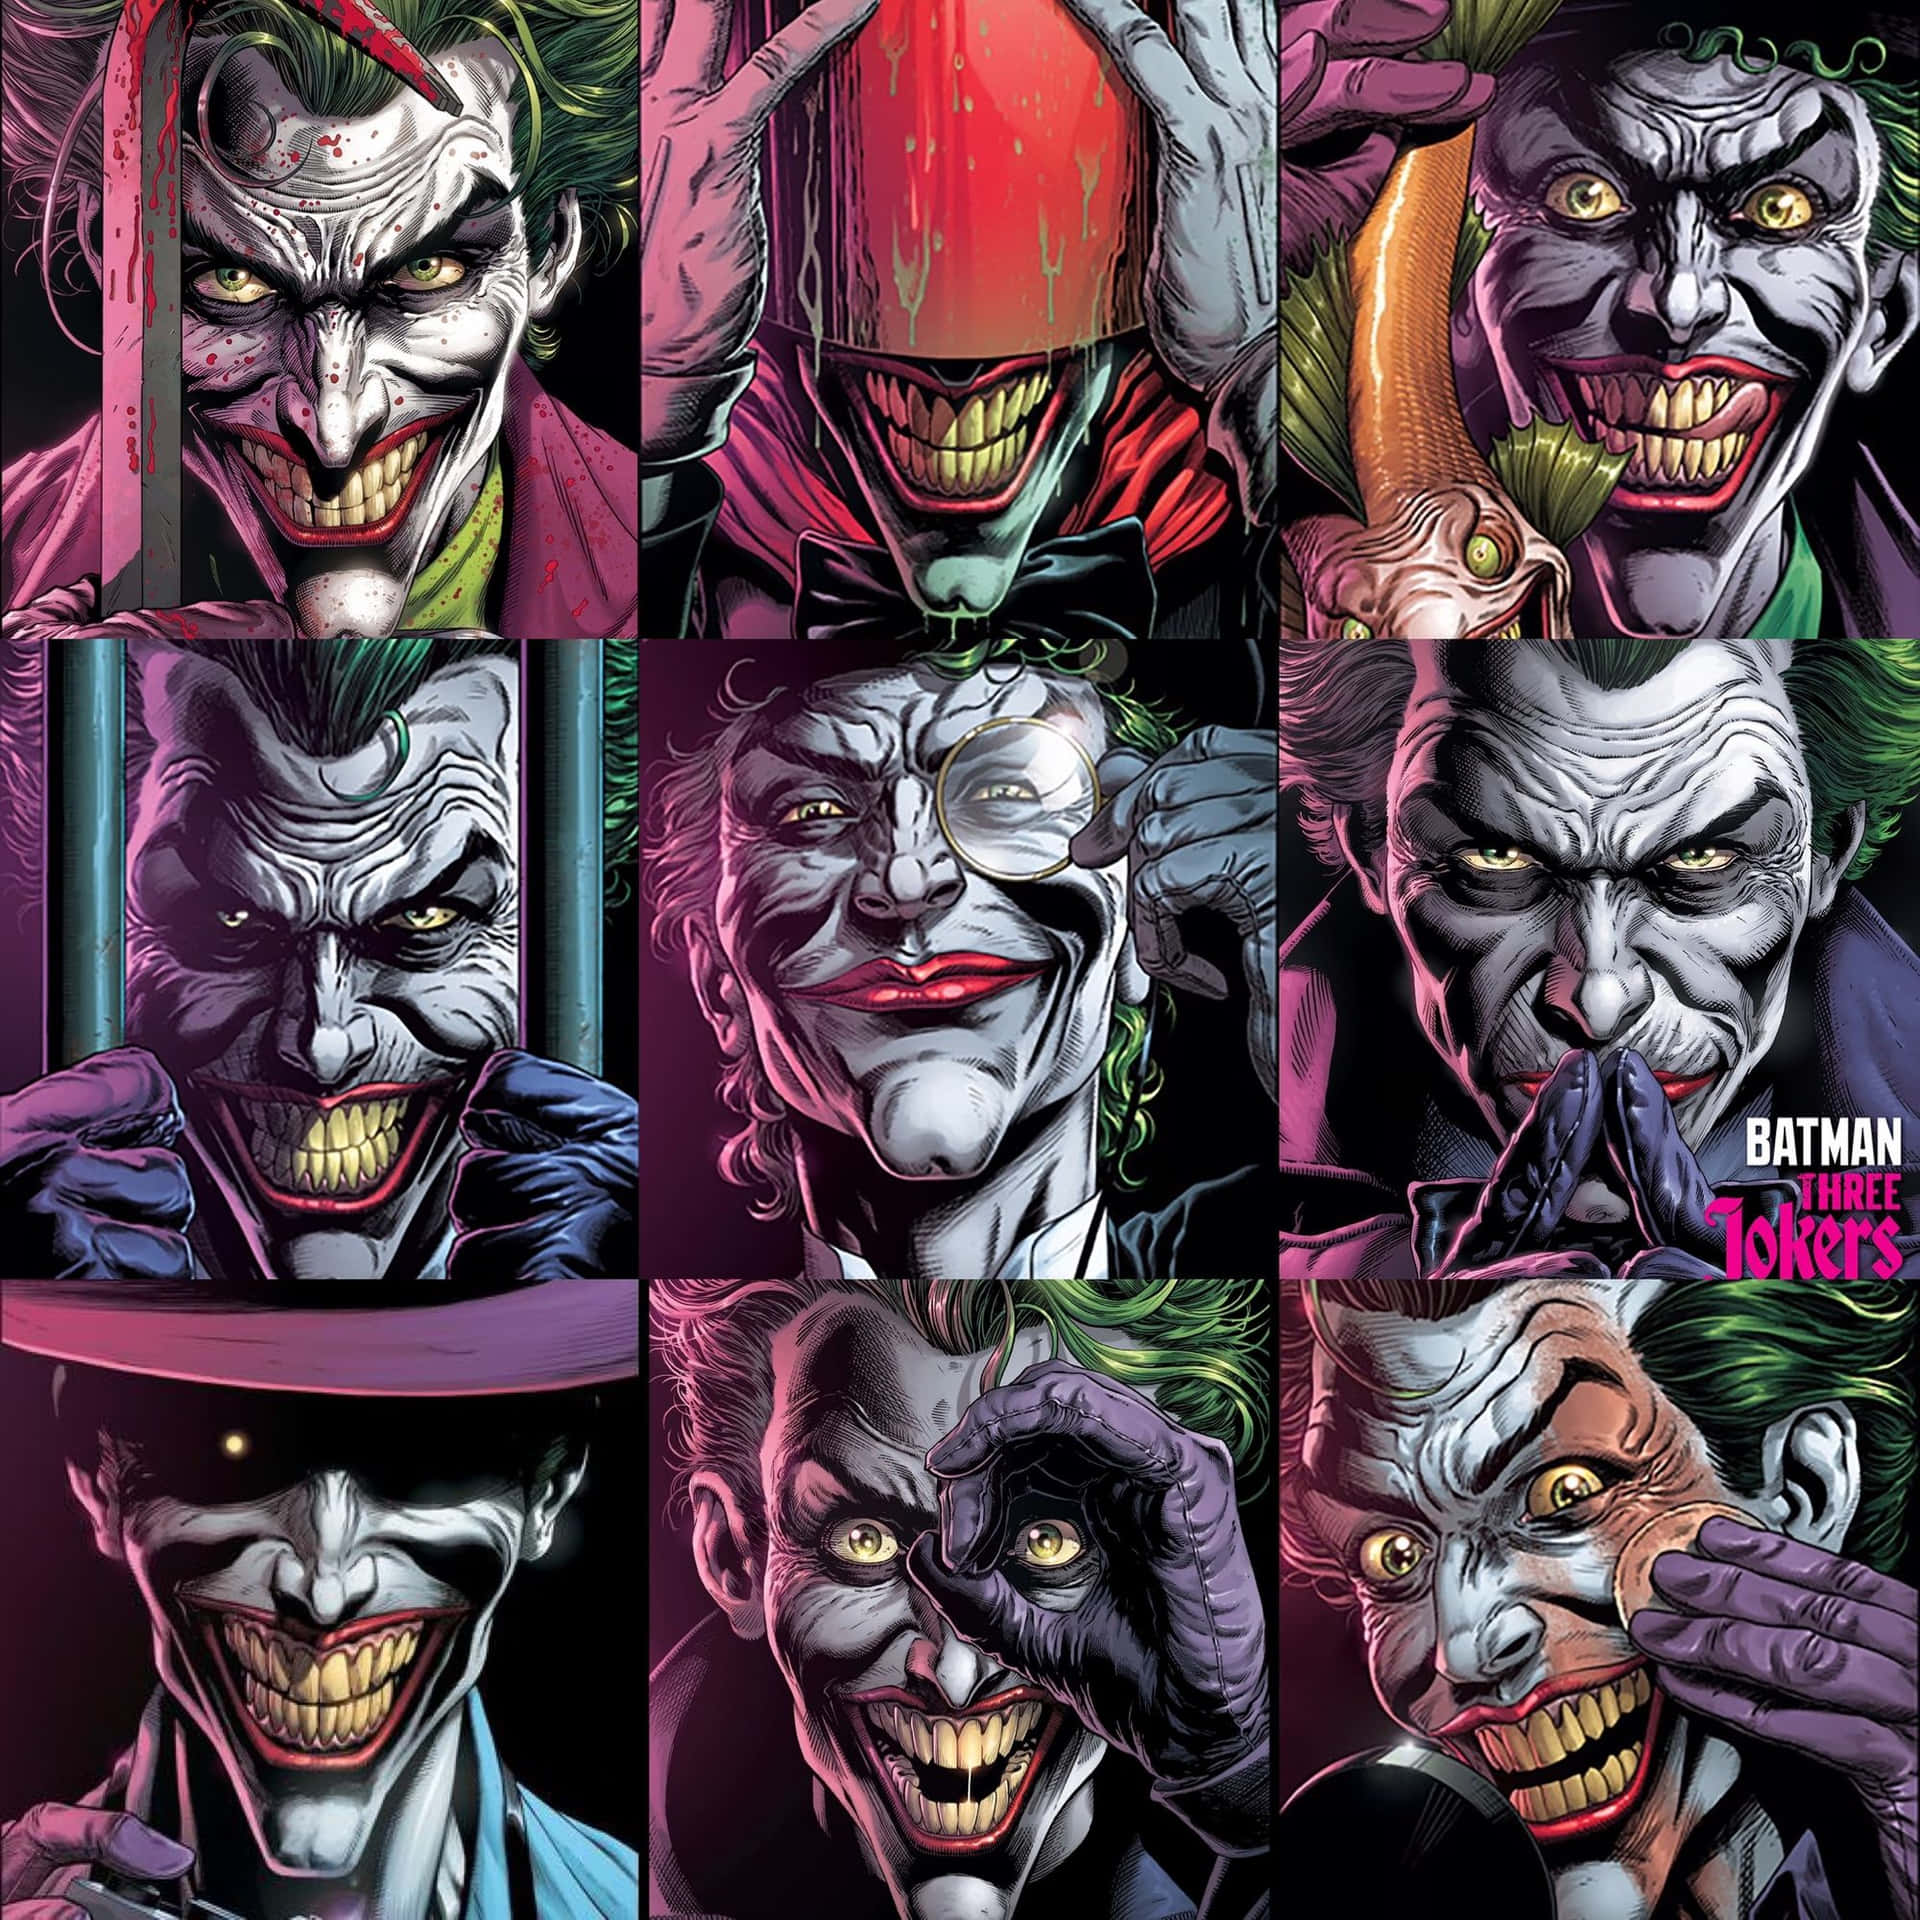 Batman faces off against the three Jokers in an intense showdown Wallpaper